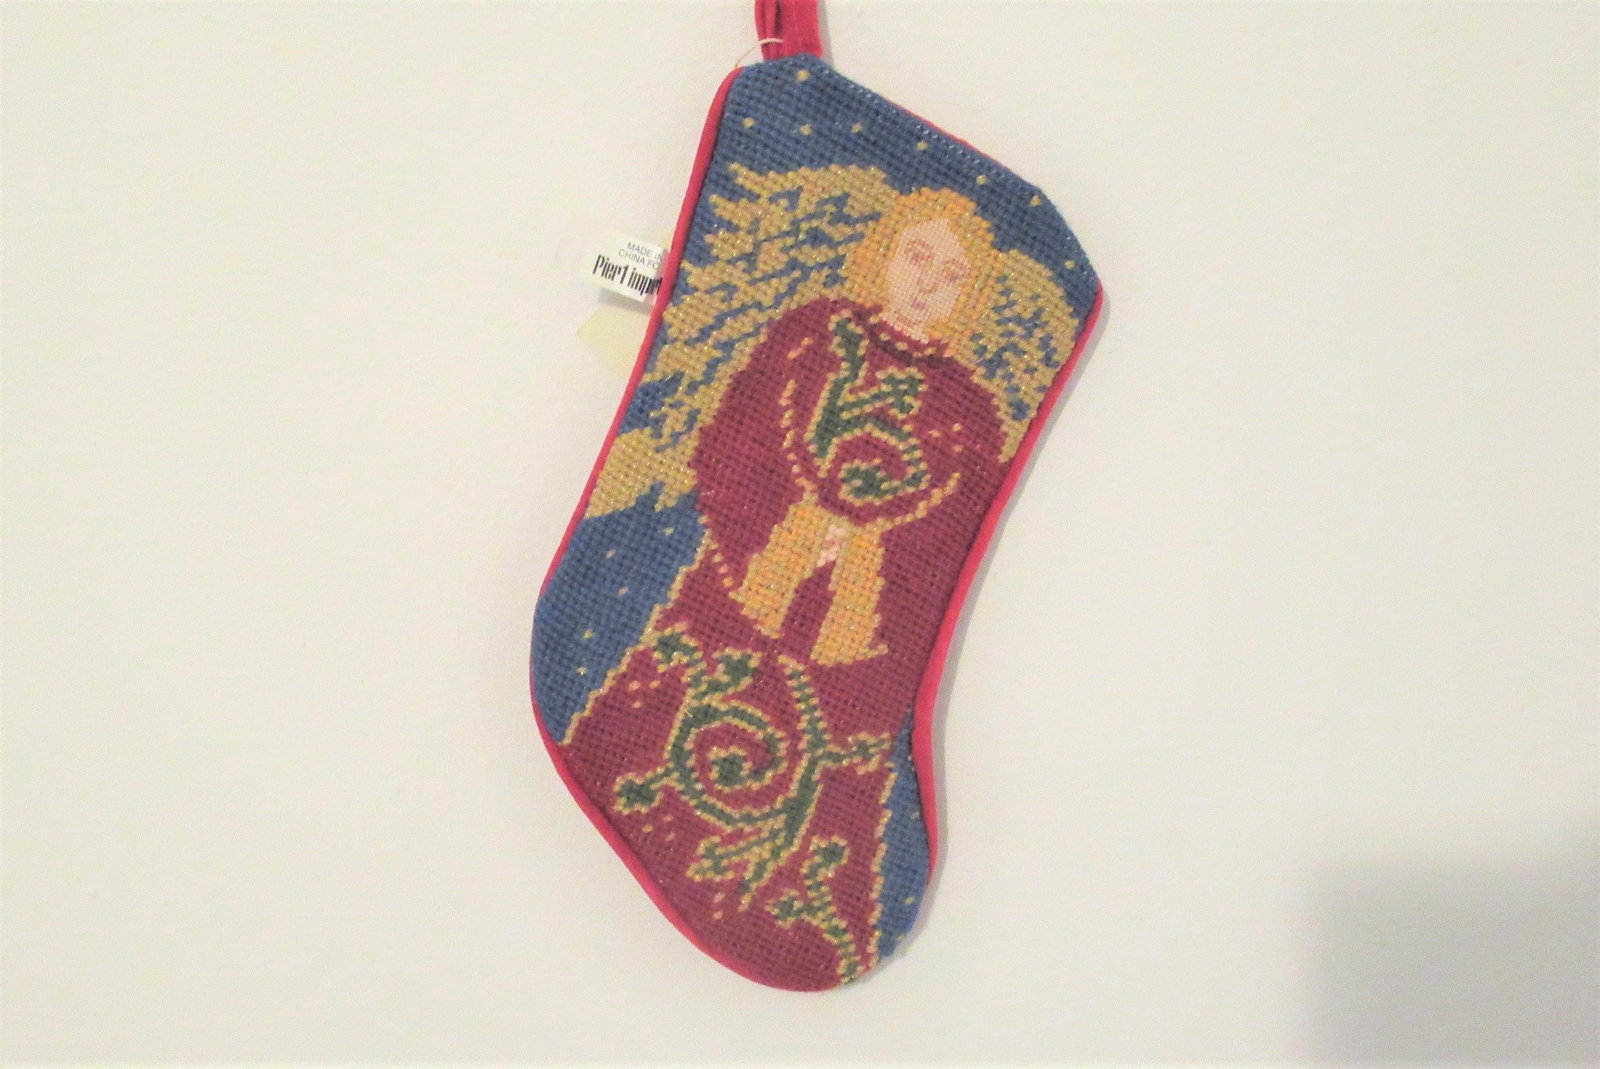 angel christmas stocking, Pier One needlepoint stockings, small vintage stocking - $15.00